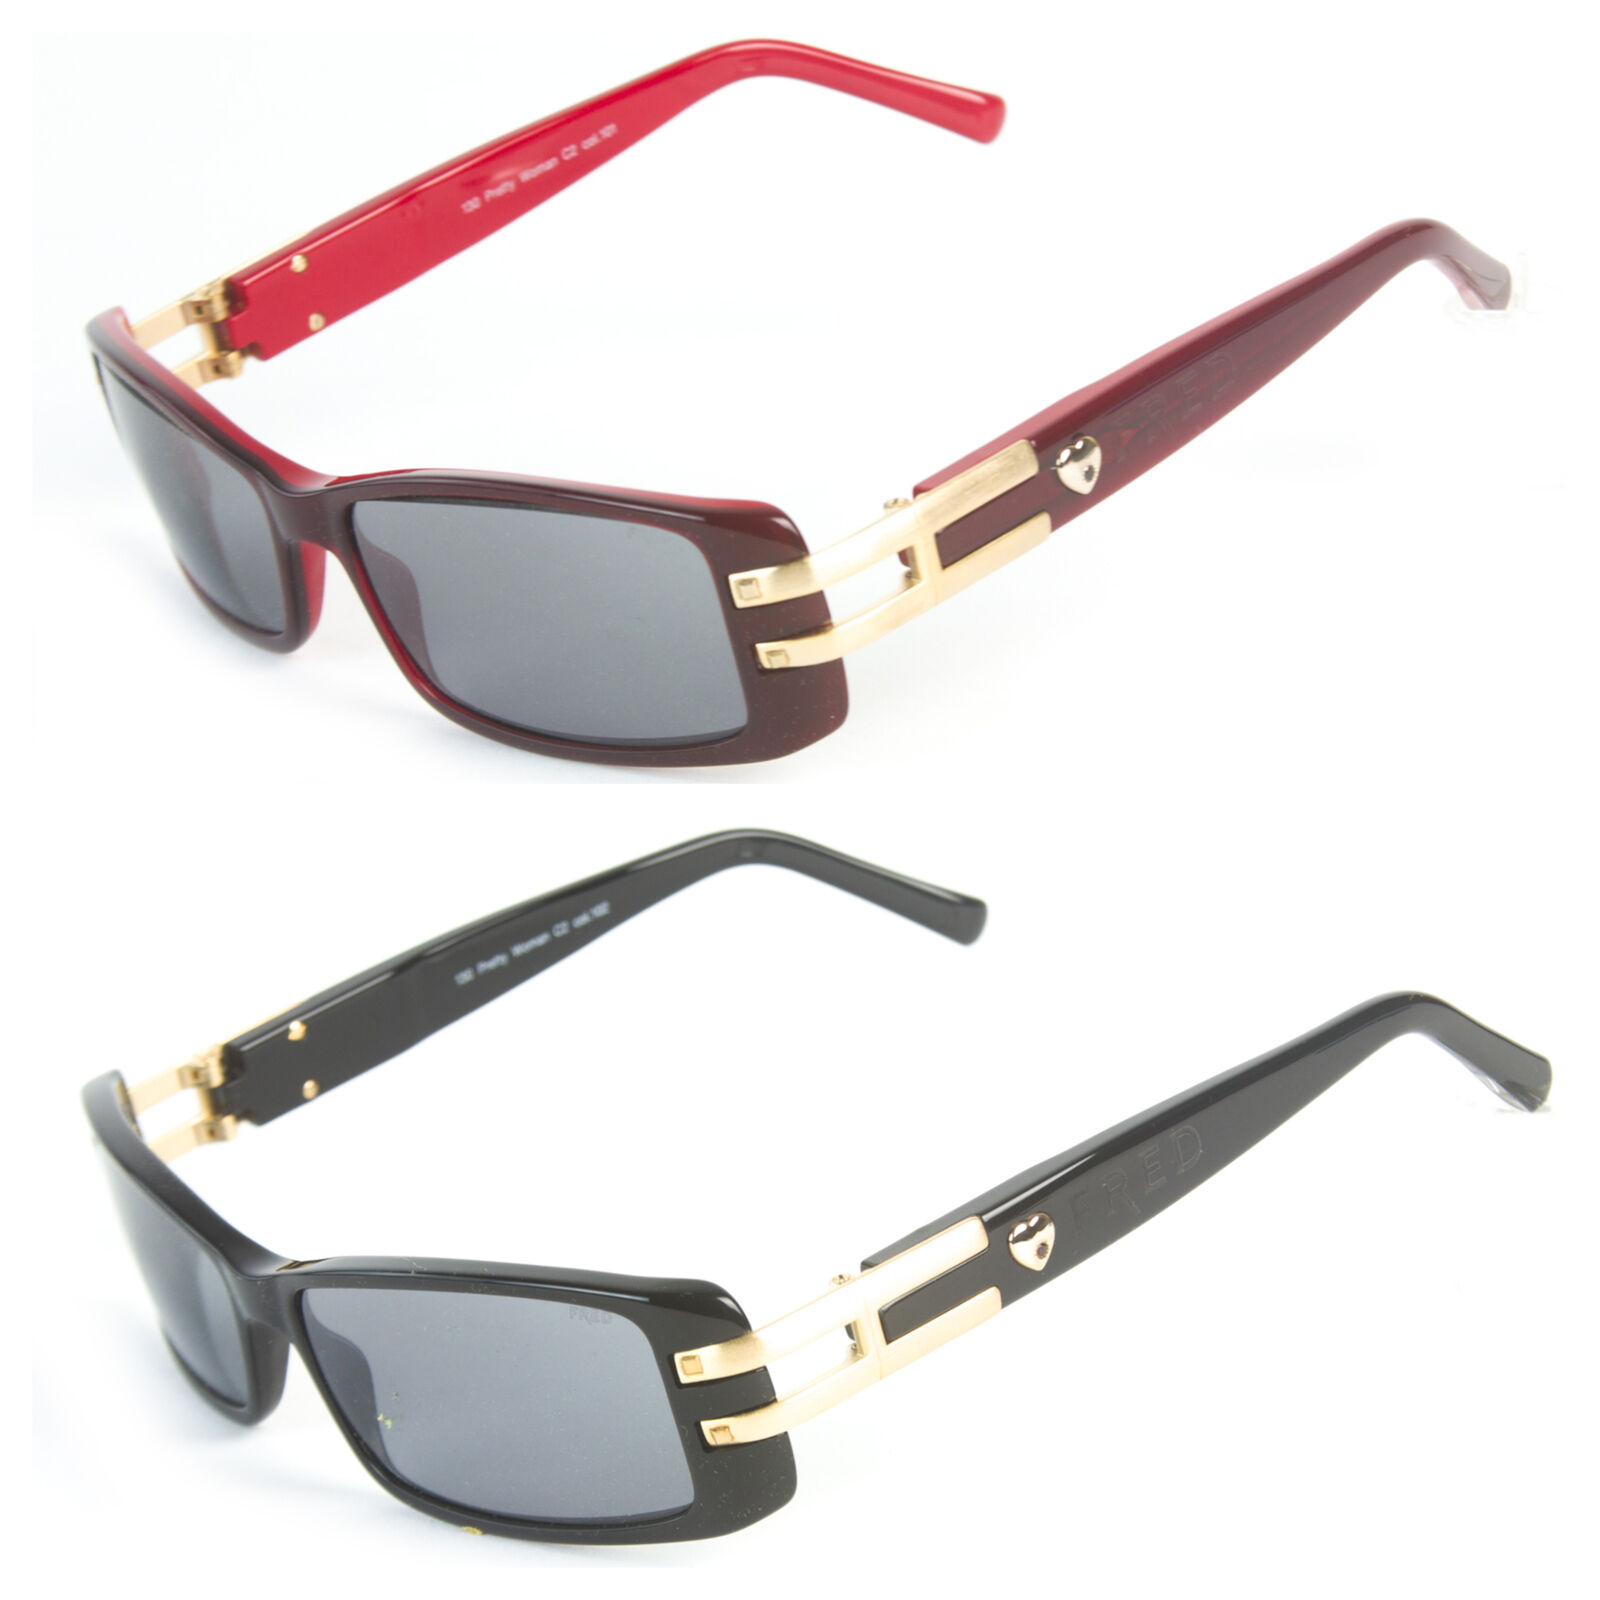 Fred Lunettes Pretty Woman C2 Sunglasses 54mm $695 NEW